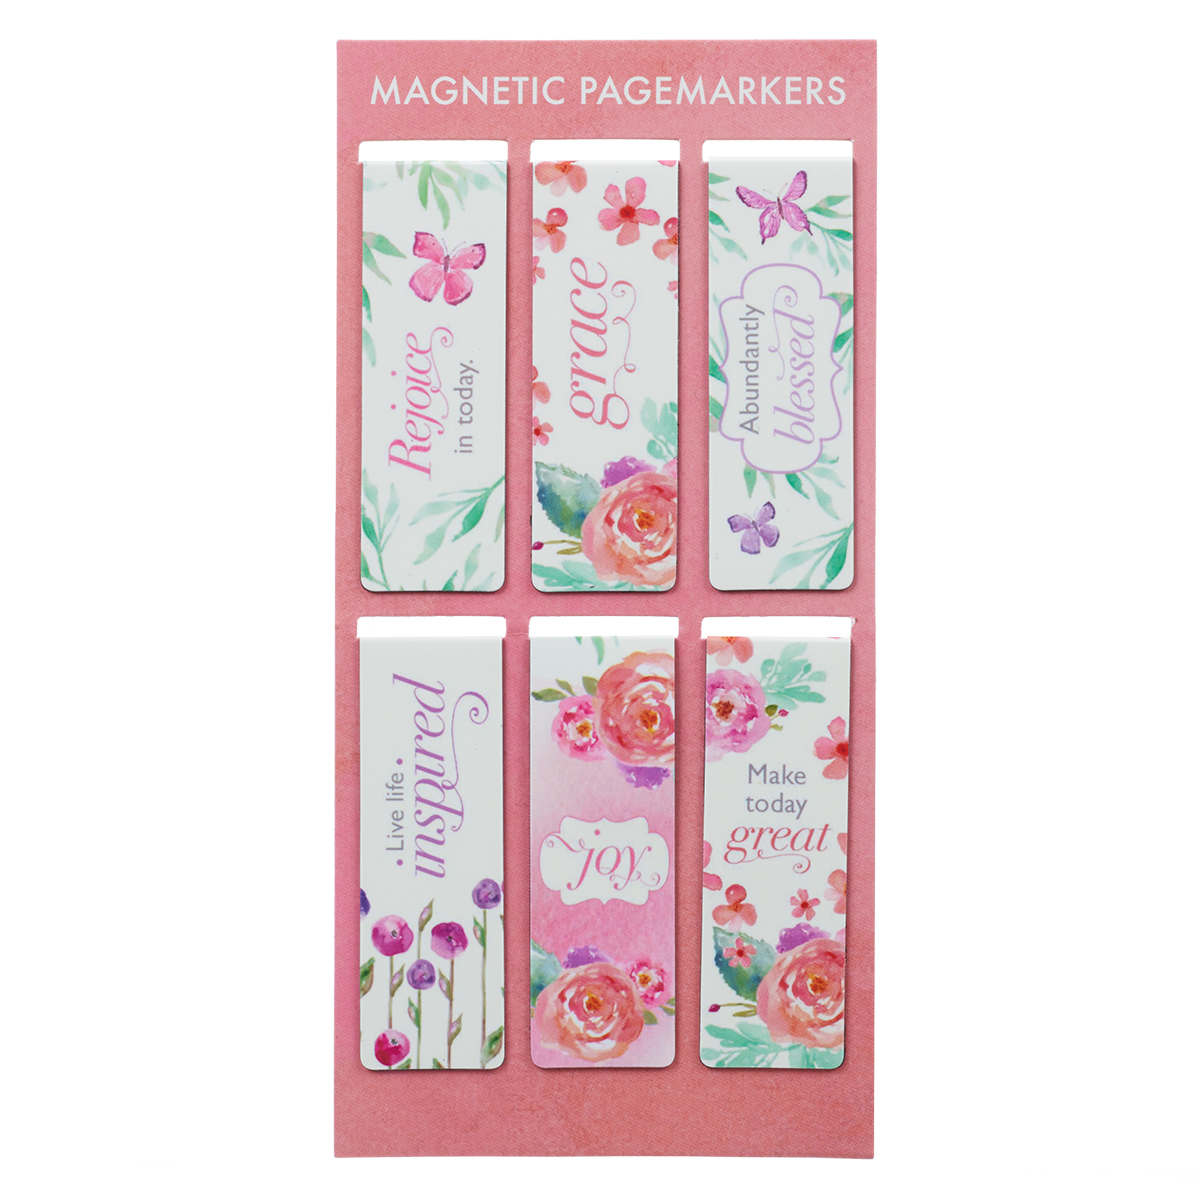 Blossoms of Blessings Magnet Bookmarks | Eden.co.uk